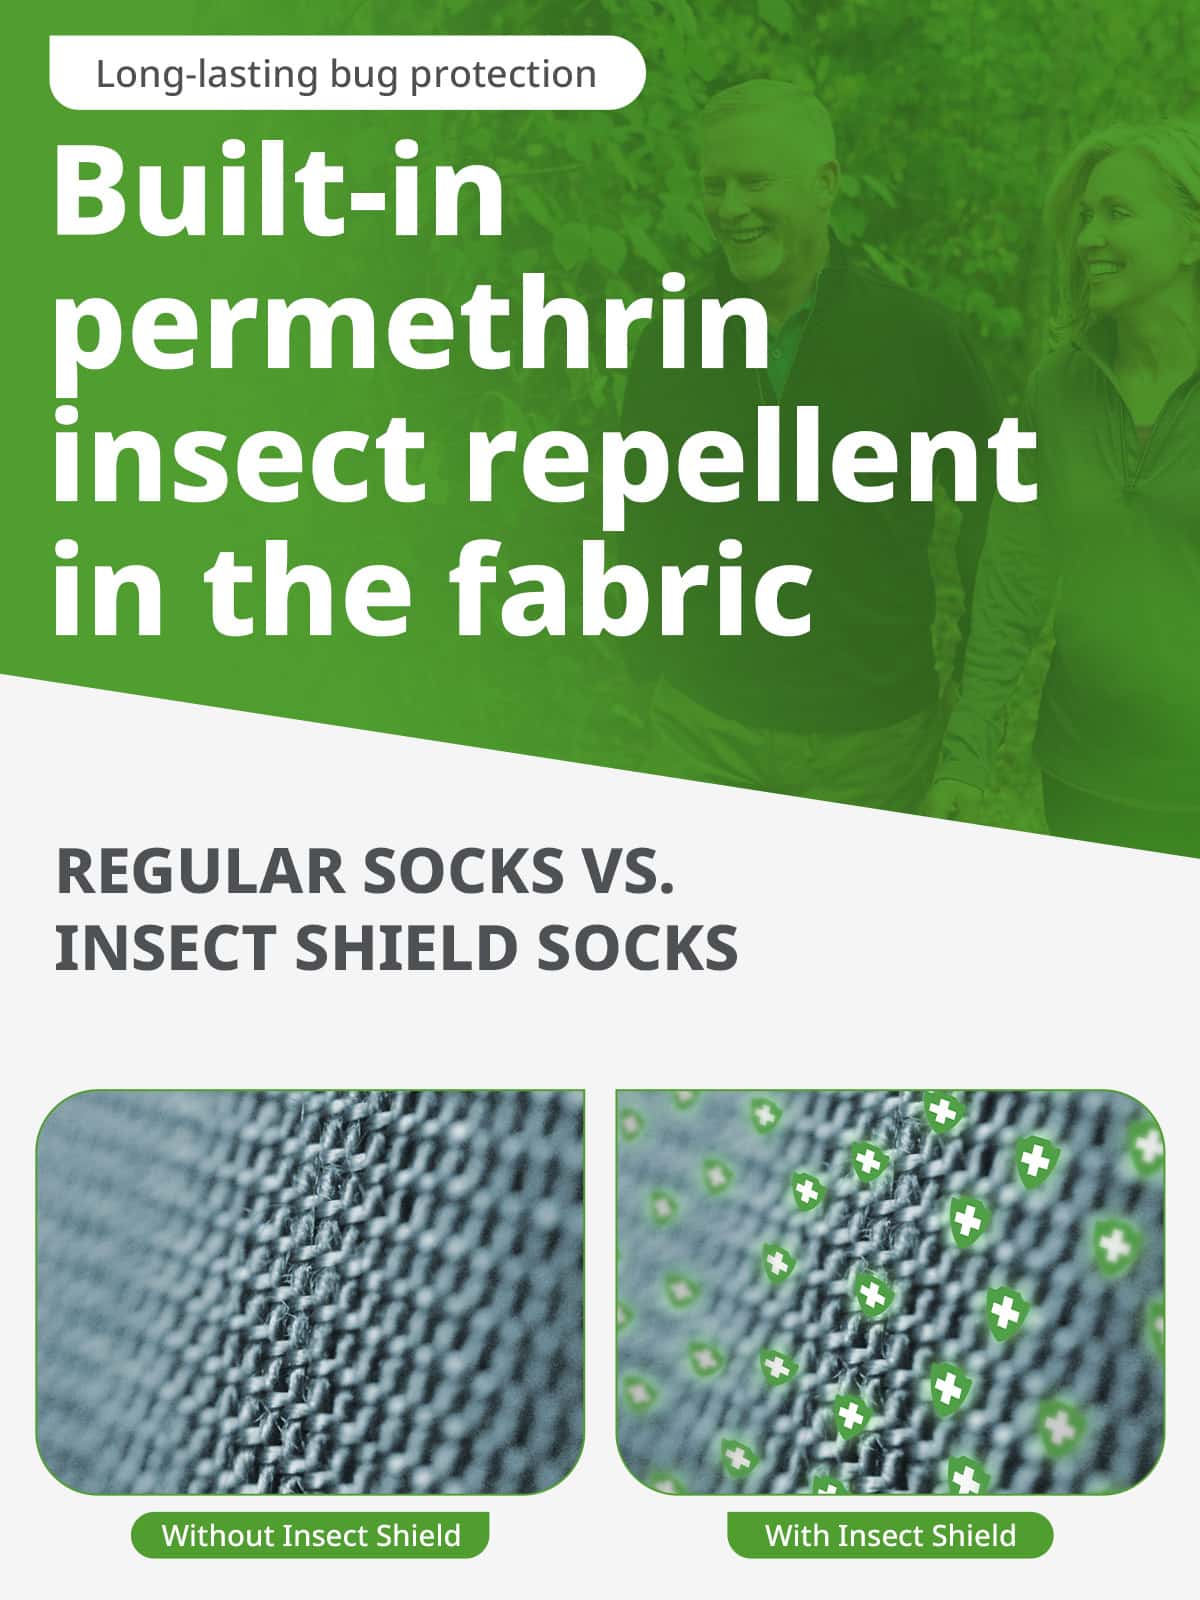 Insect Shield Heavyweight Hiker Socks